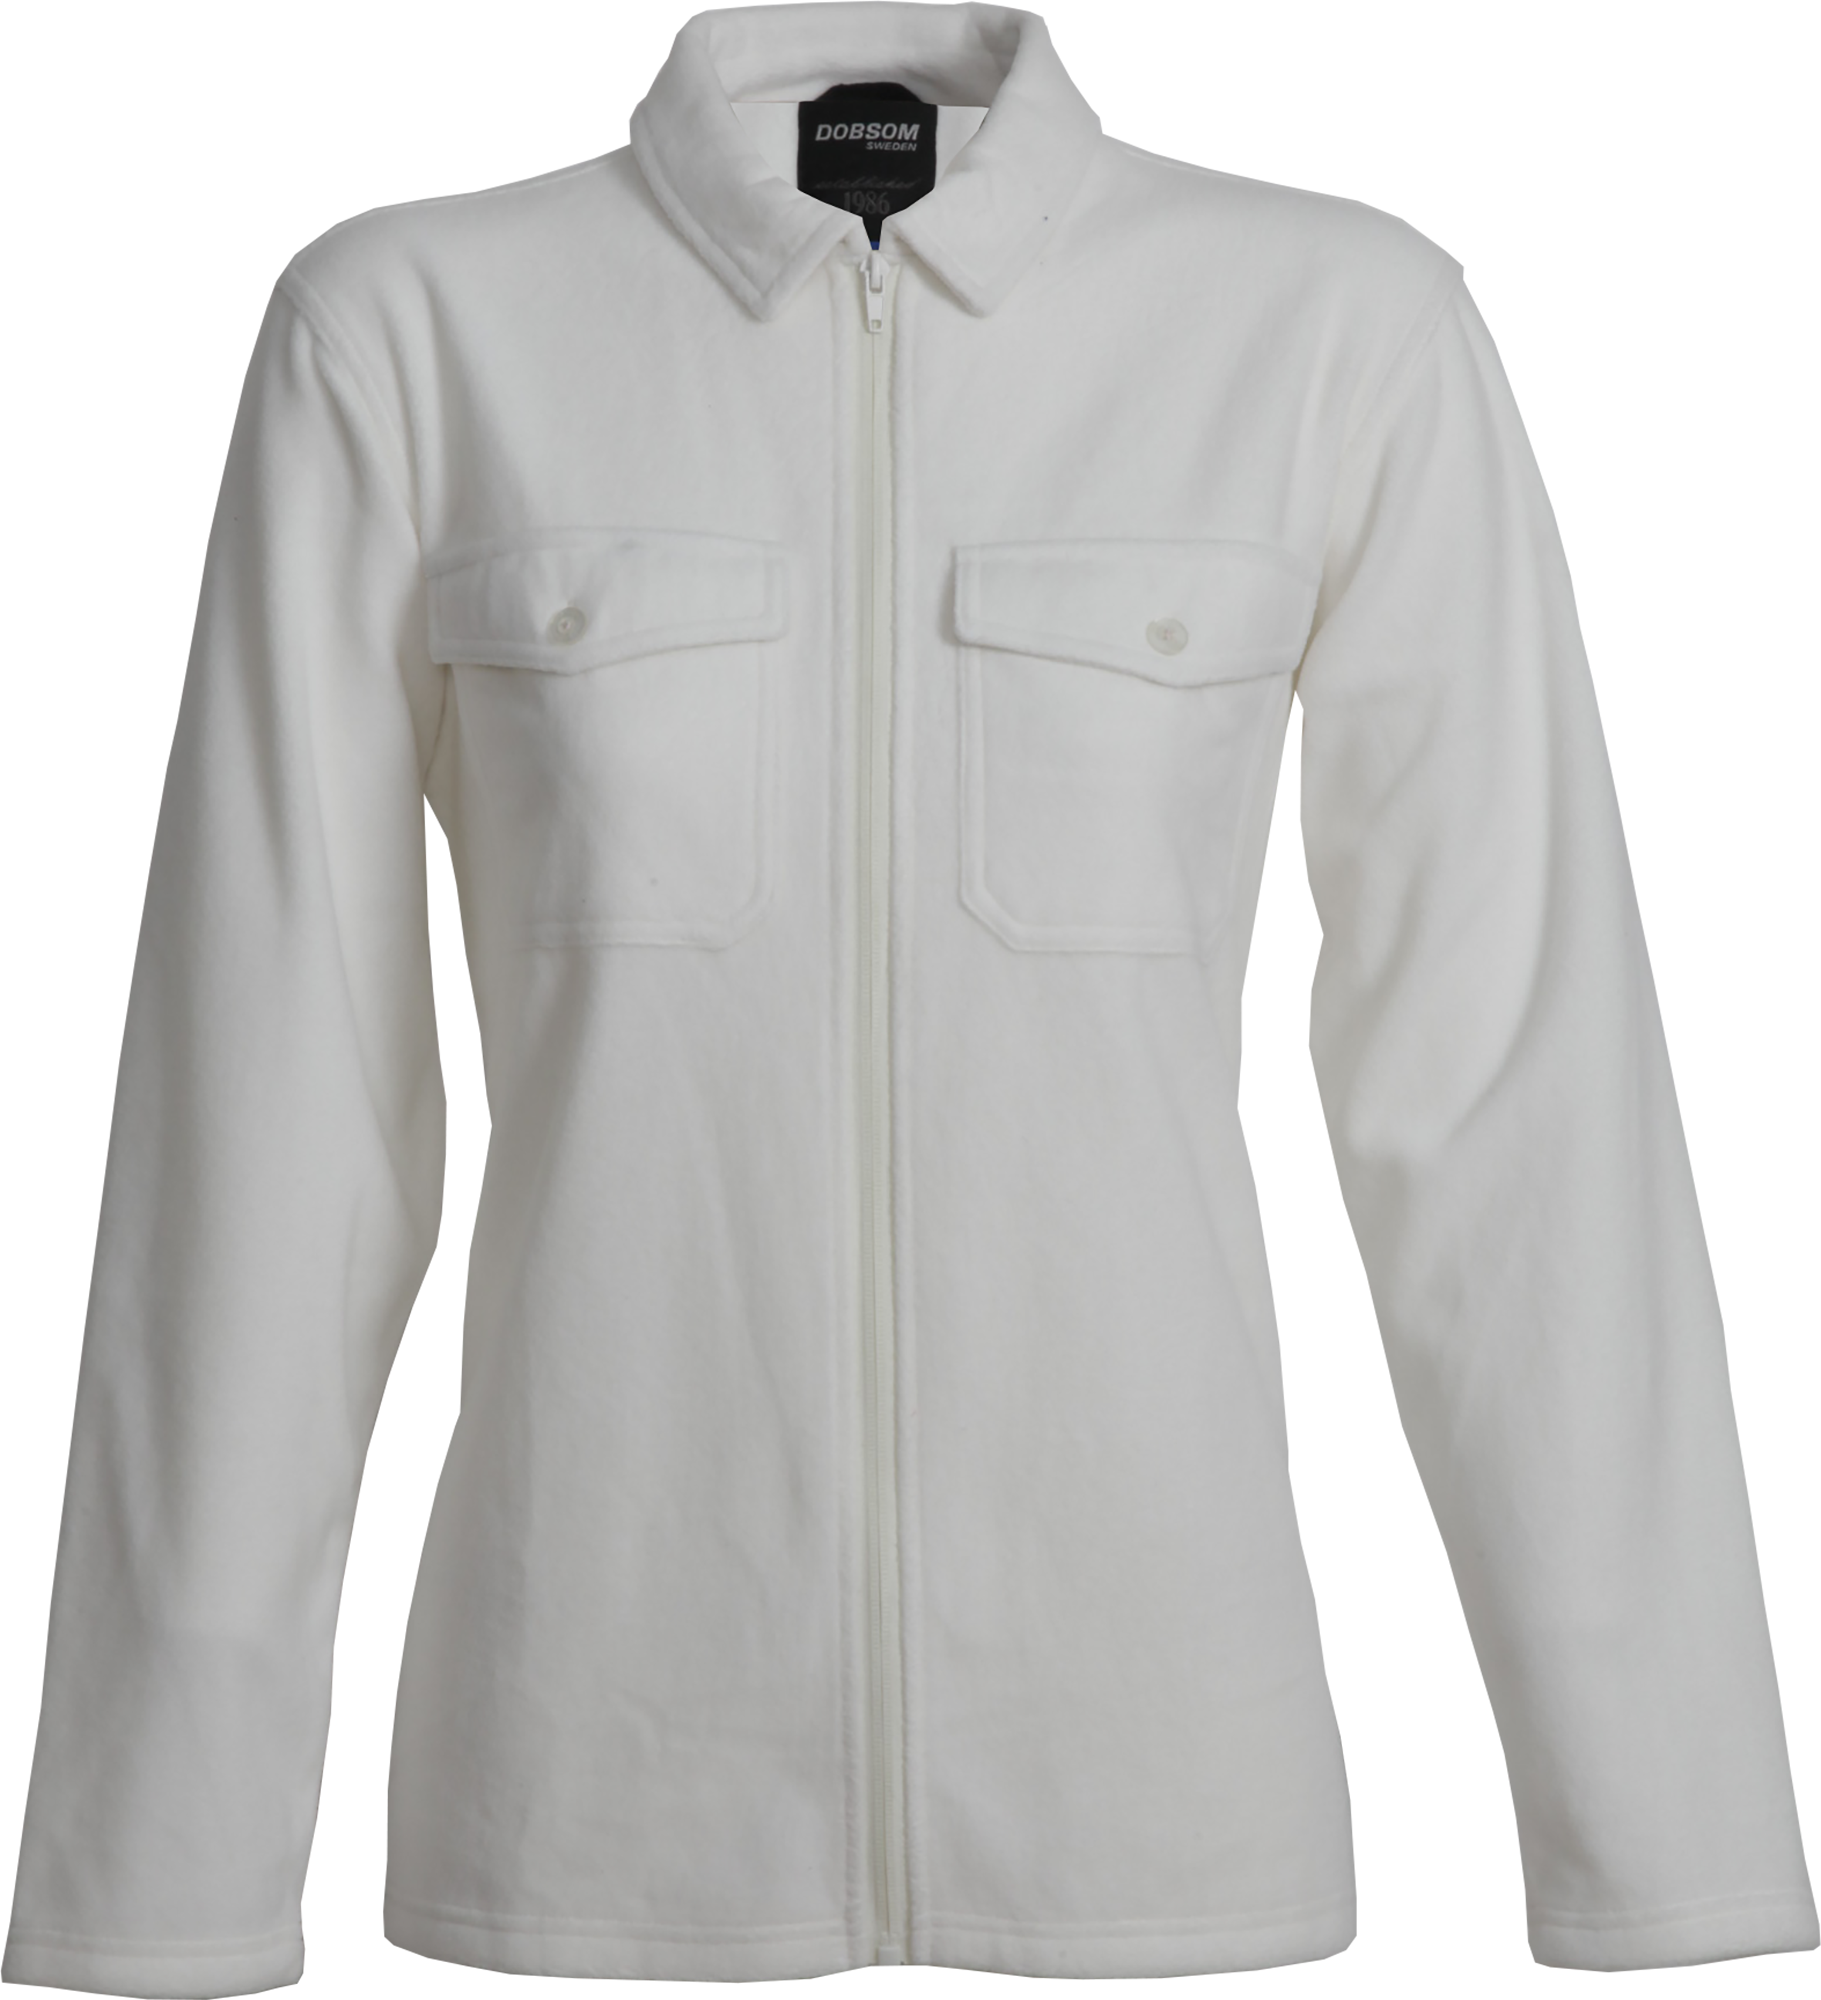 Dobsom Women’s Pescara Fleece Shirt Offwhite